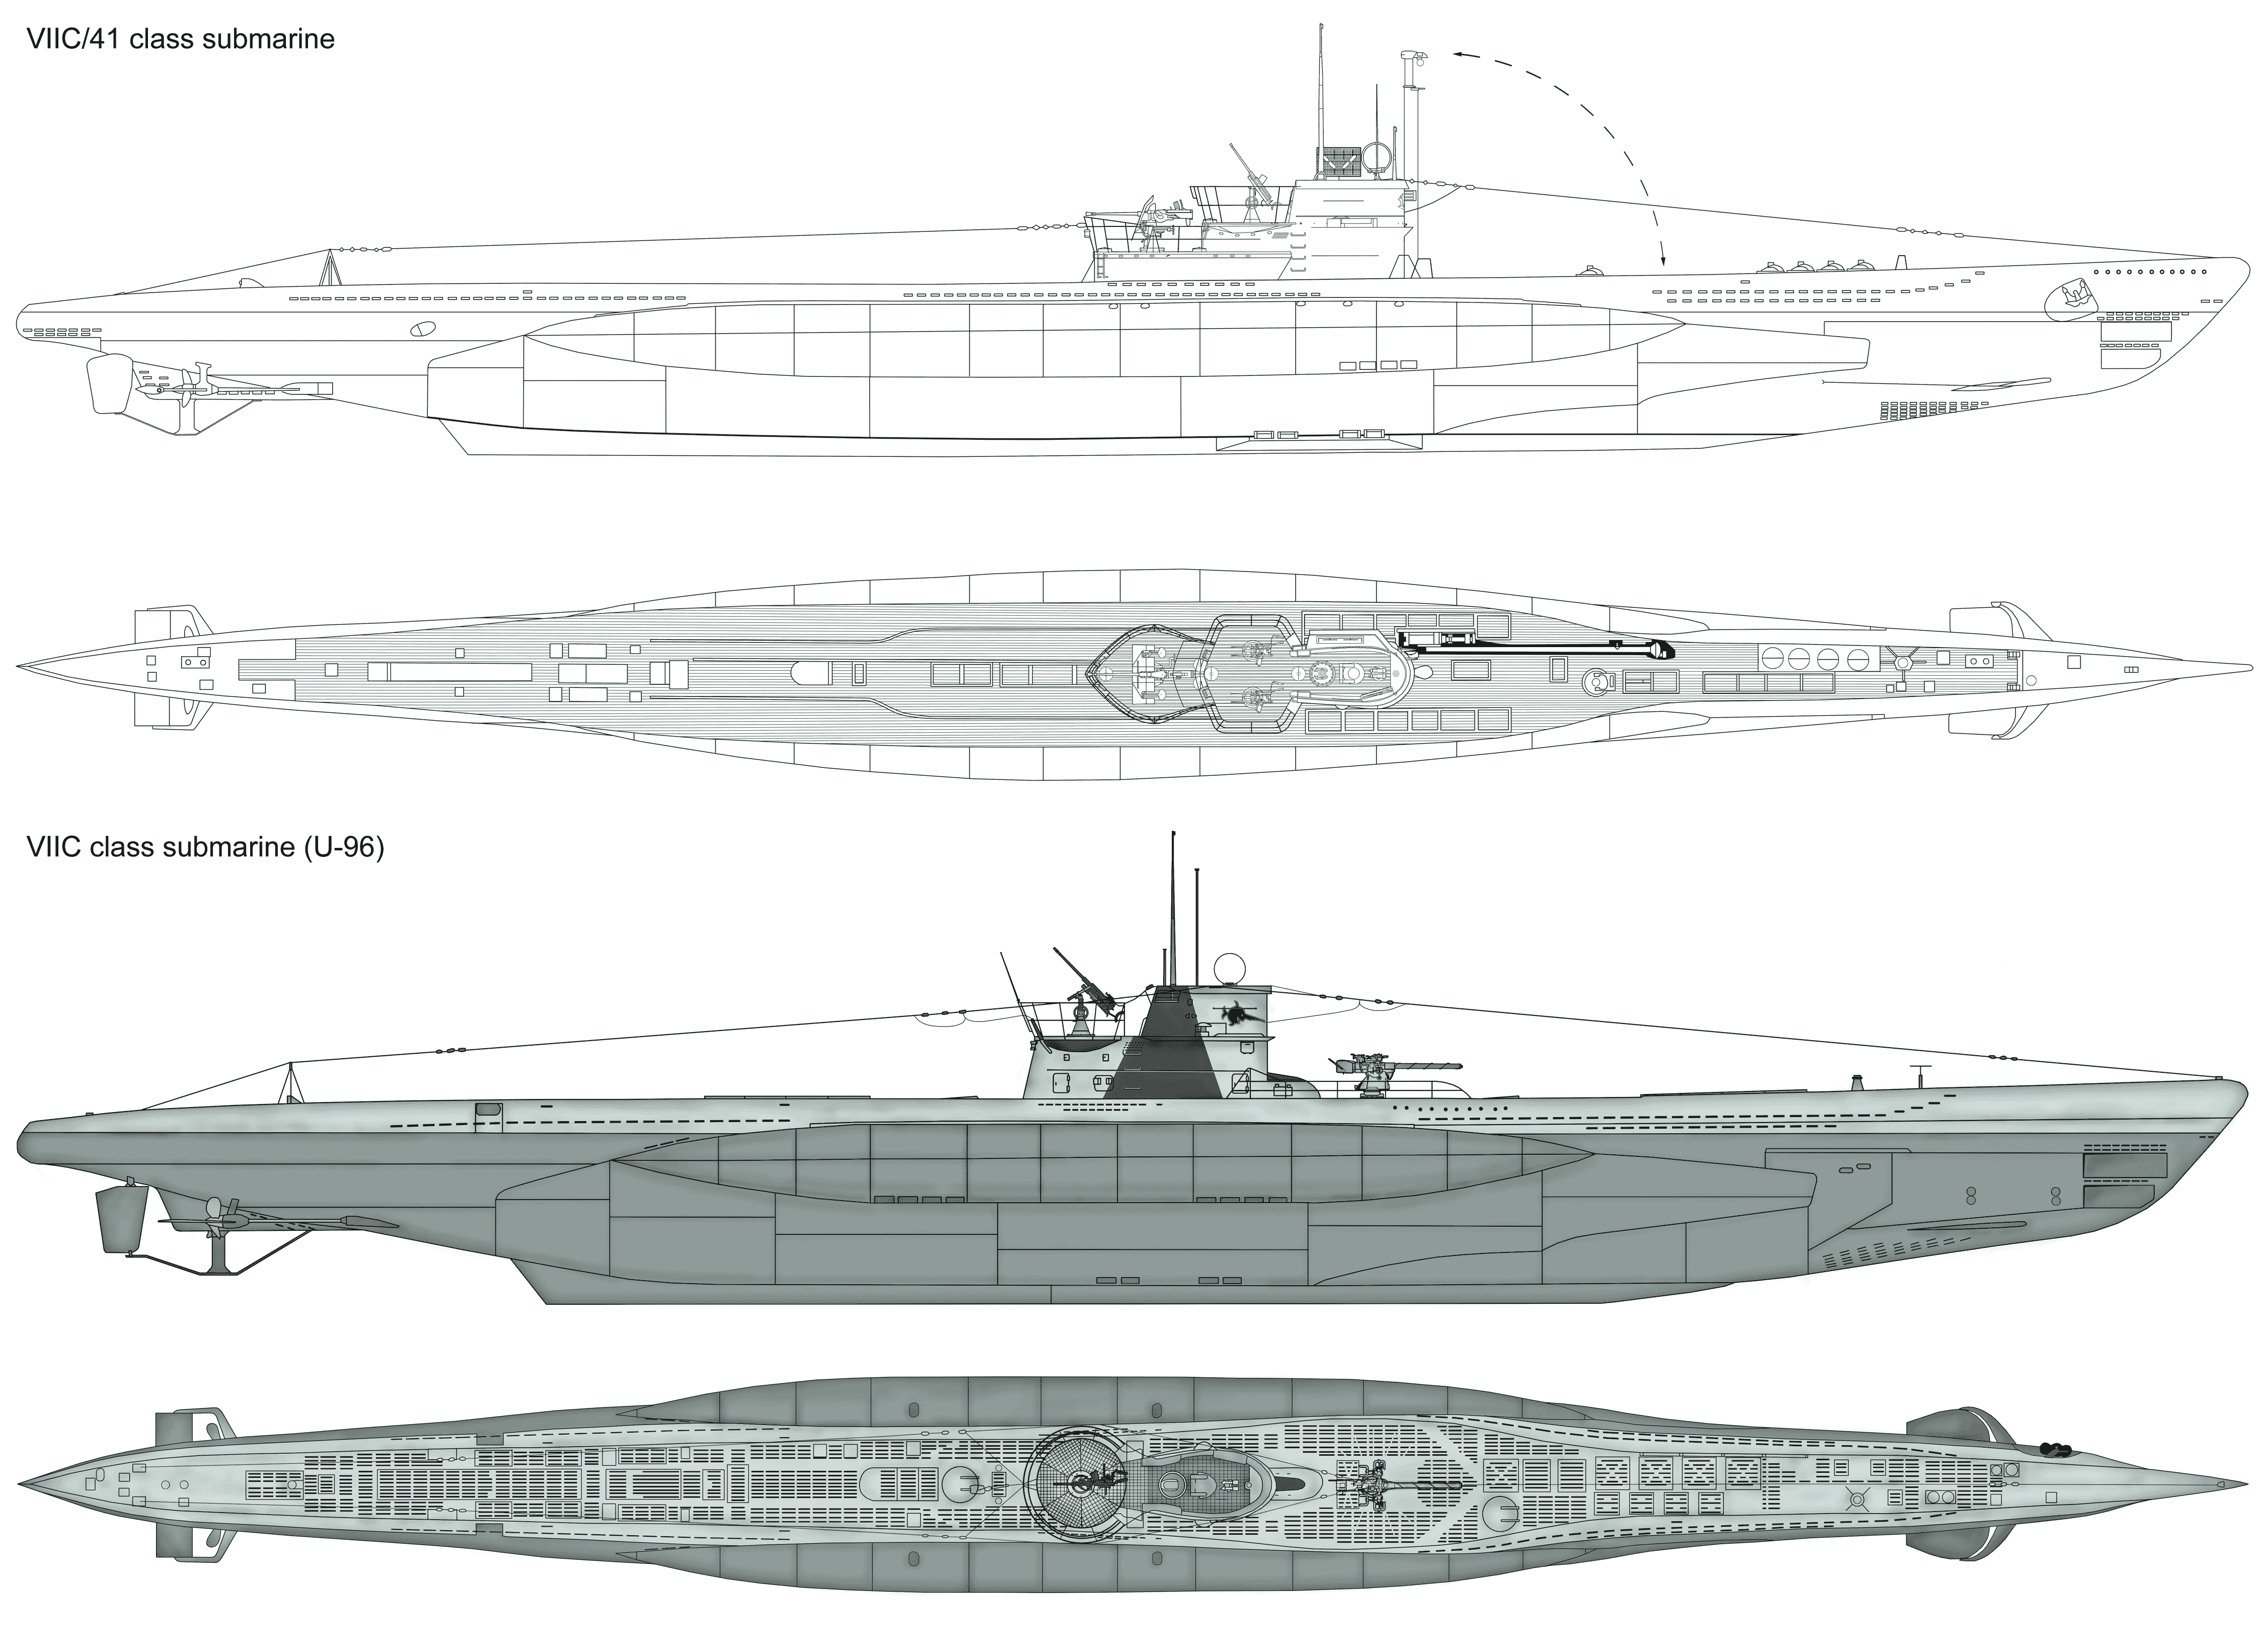 U-96 German submarine blueprint